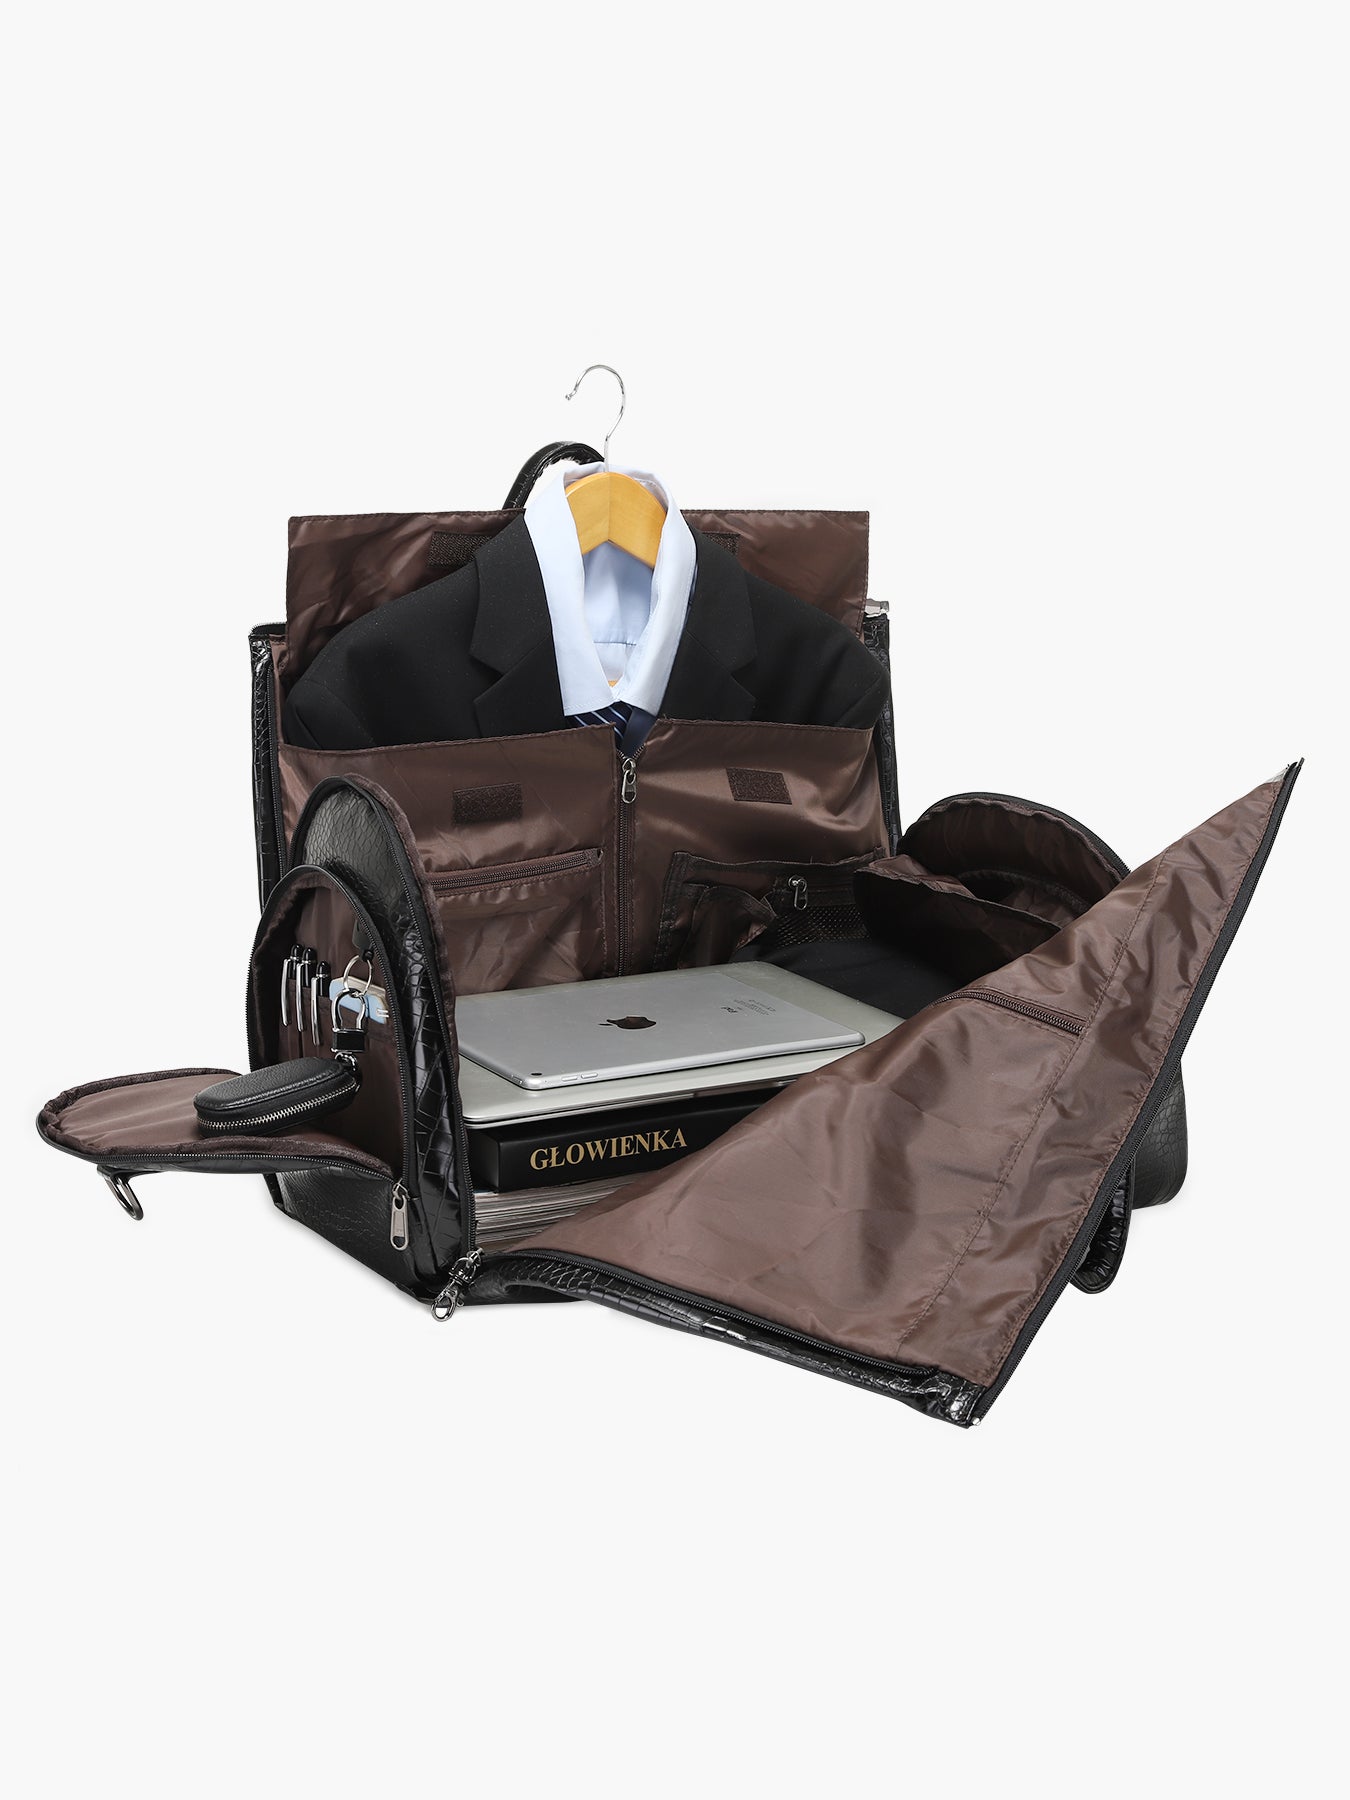  Modoker Carry On Garment Bags for Business Travel, Suit Bag  with Shoulder Strap for Men Women - 2 in 1 Hanging Garment Bag Suit Carrier,  Black